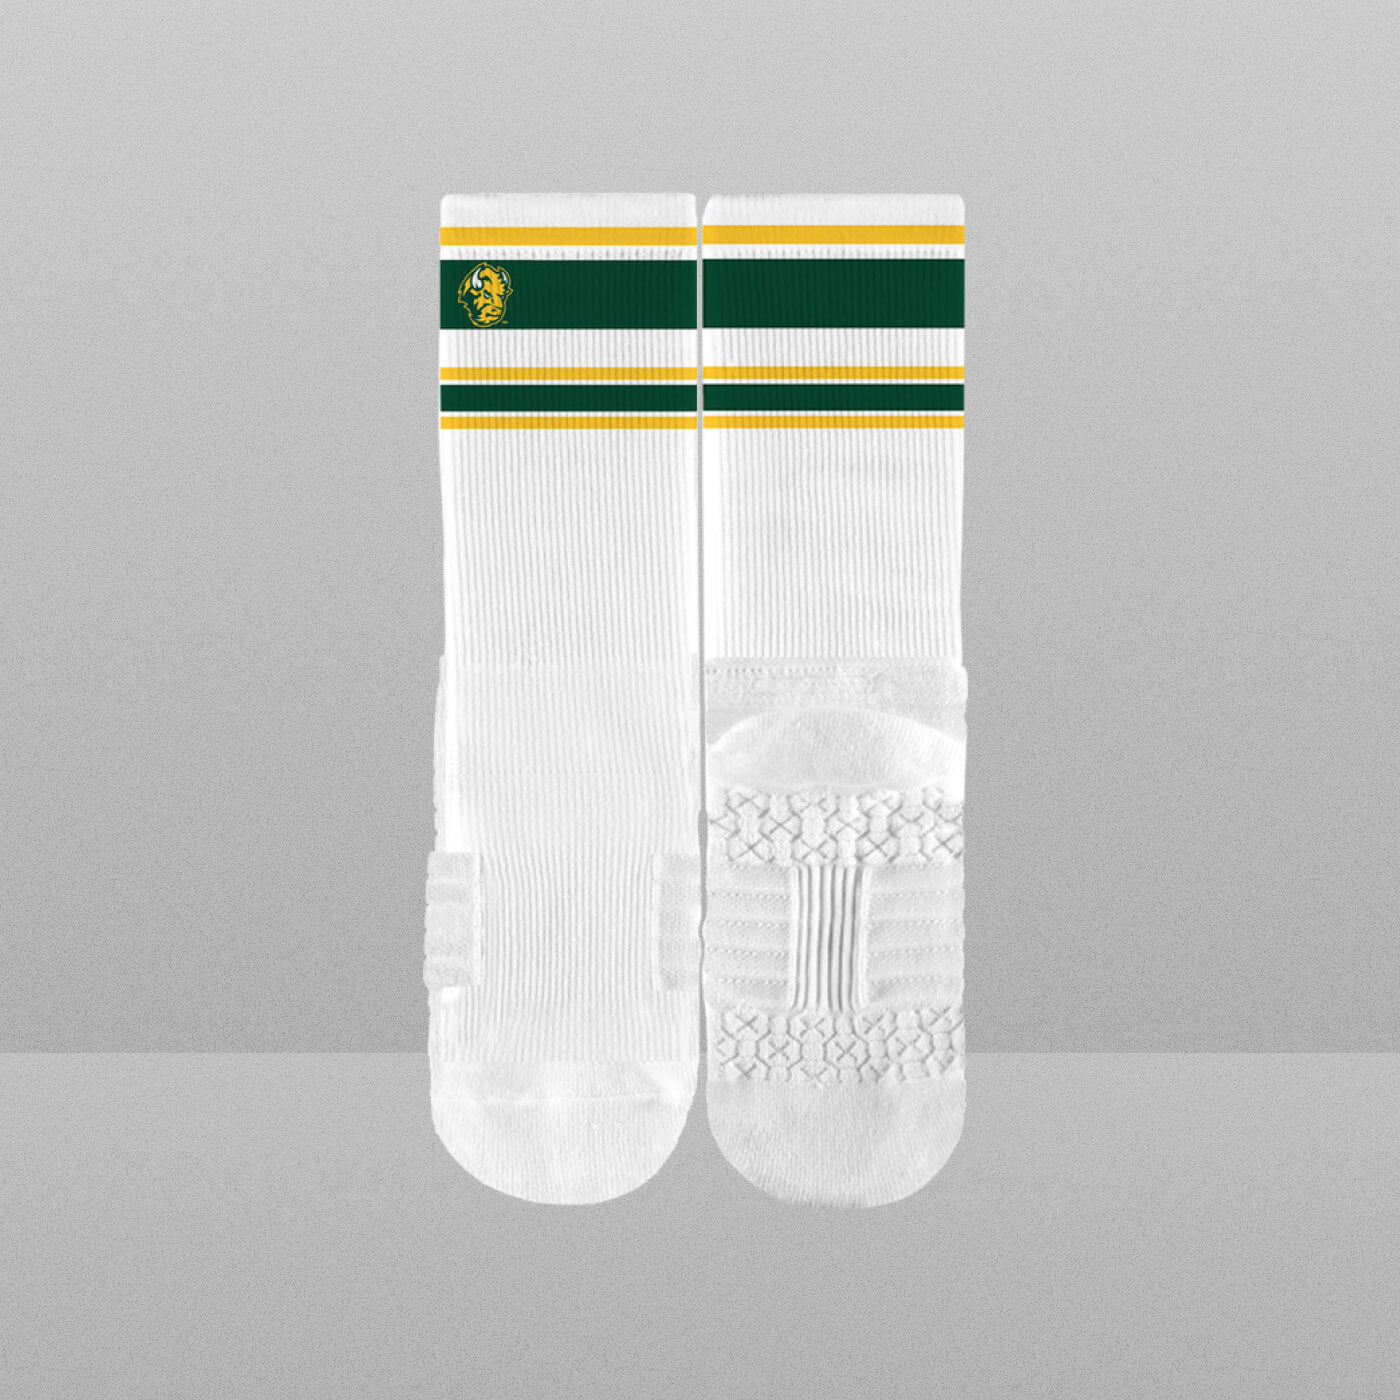 Boston Celtics ST Crew Socks - Throwback